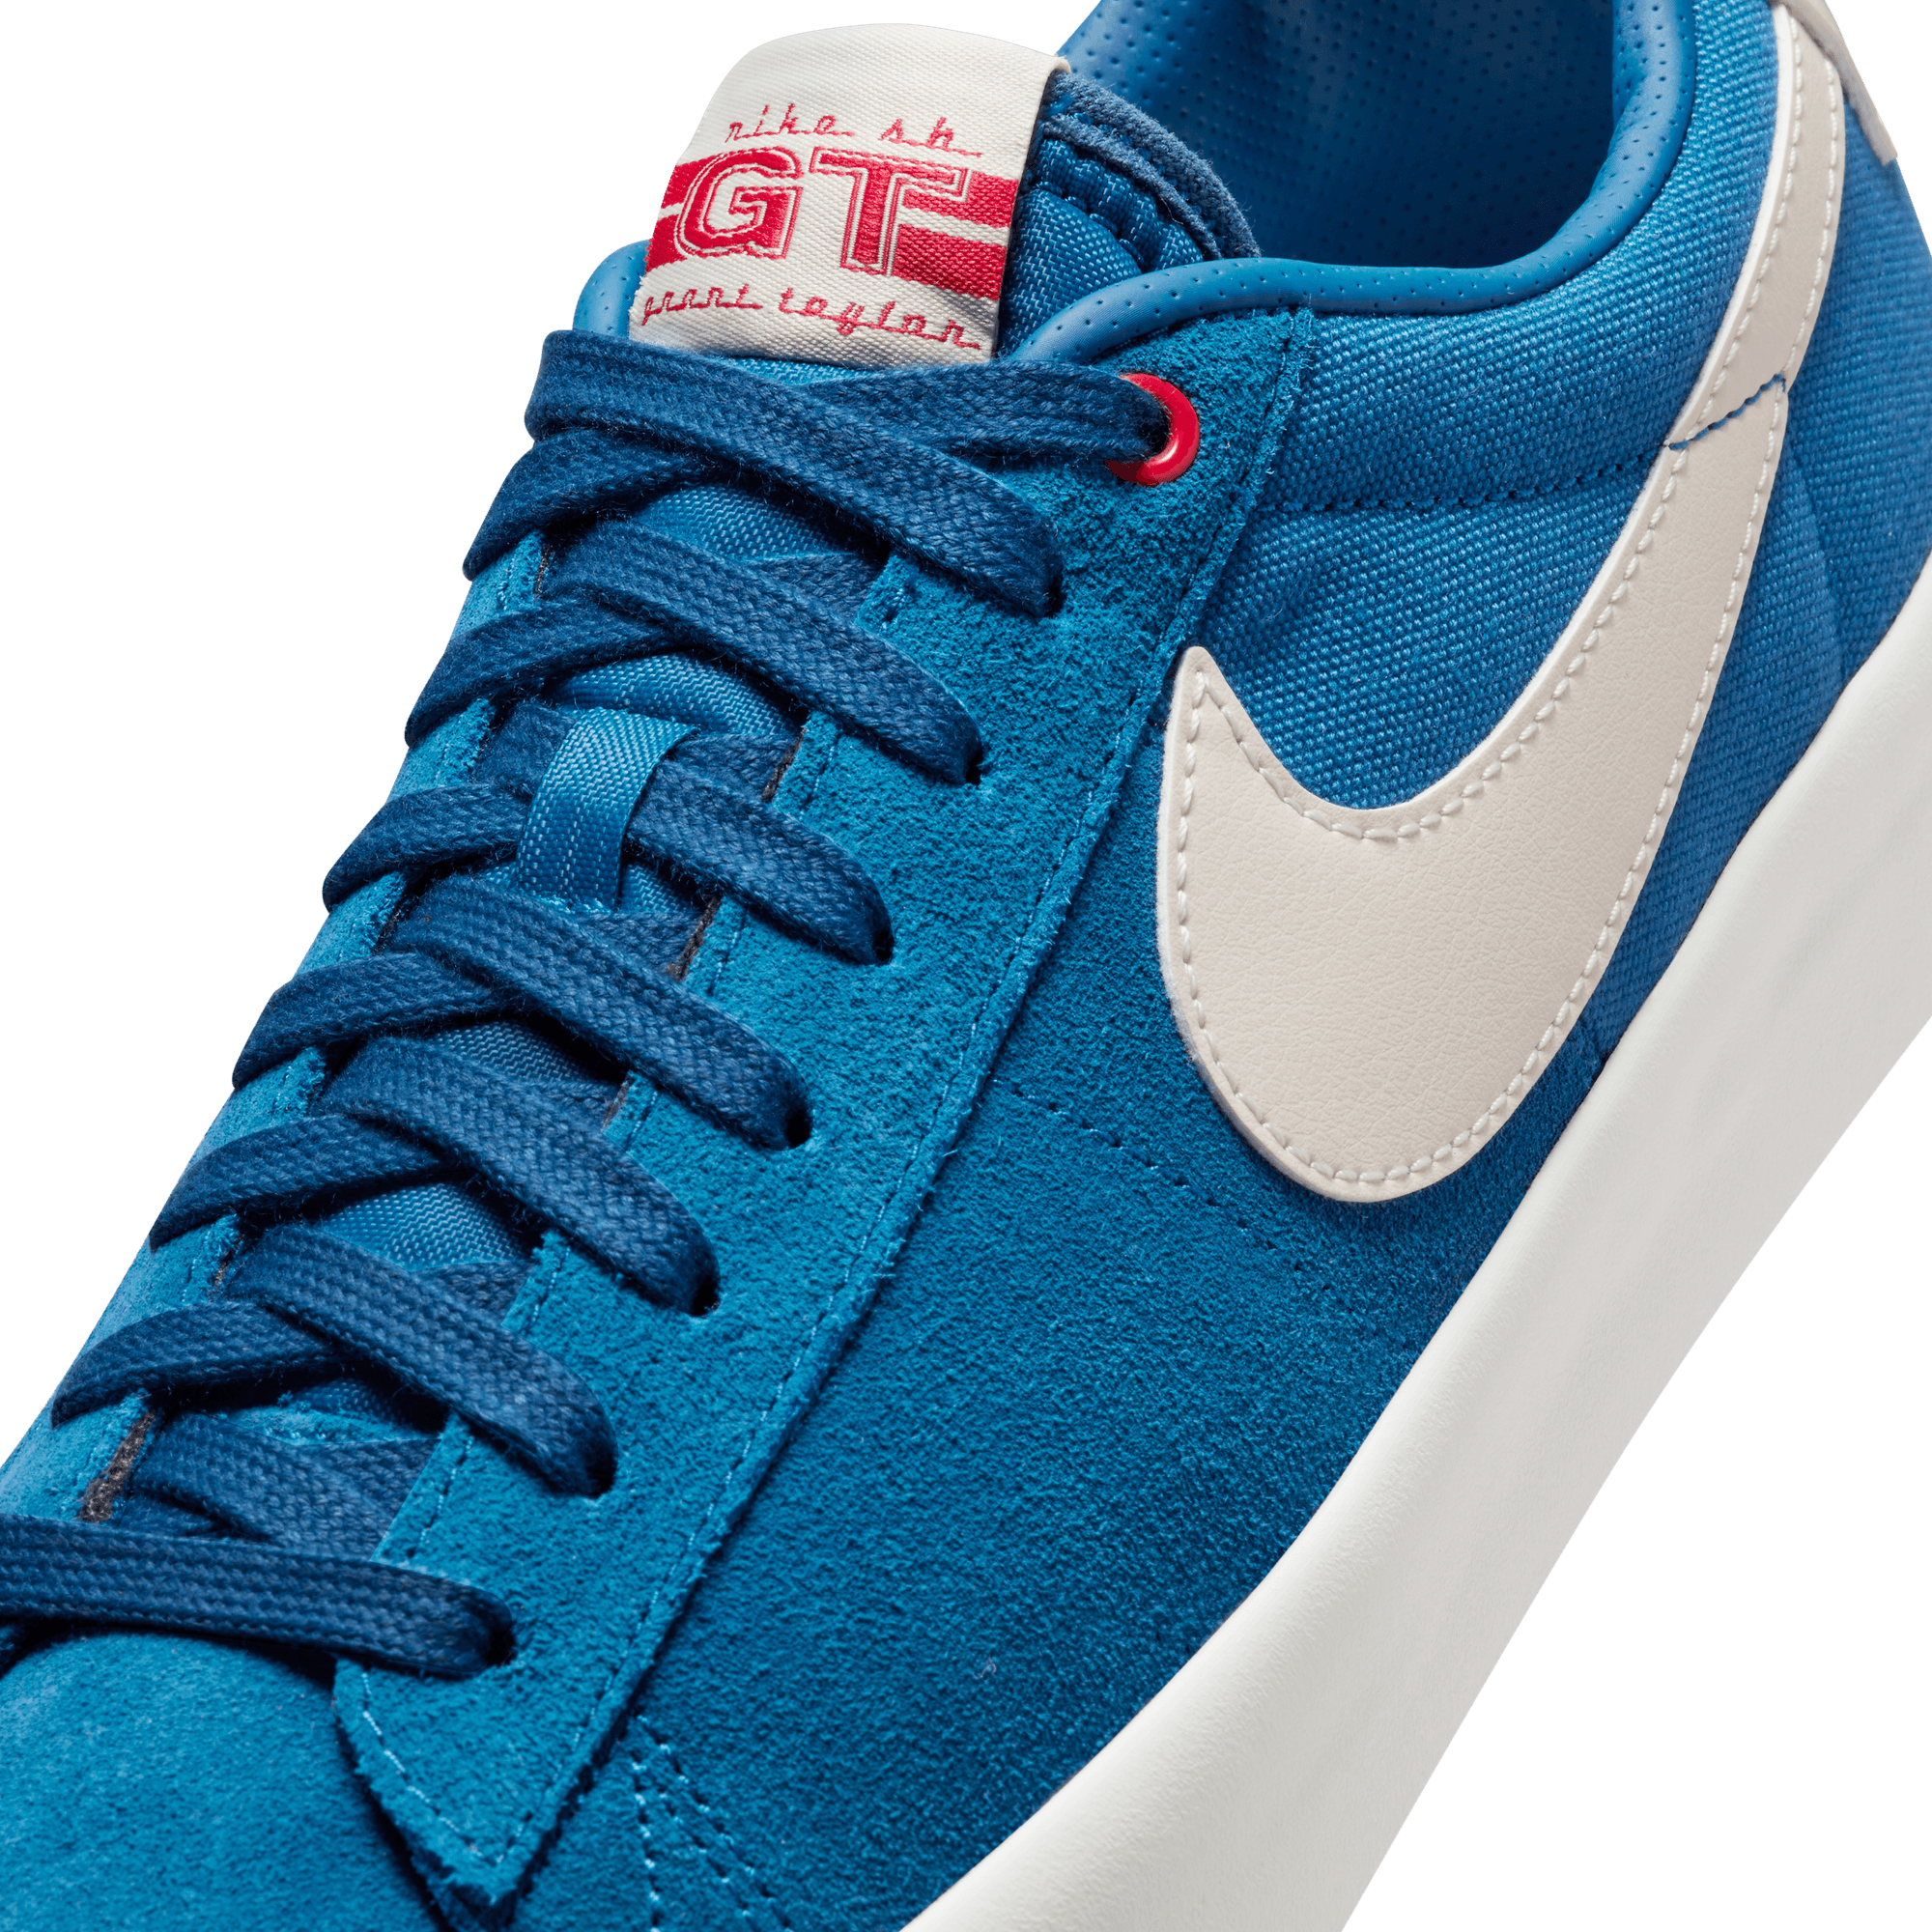 Court Blue GT Blazer Low Pro Nike SB Skate Shoe Detail